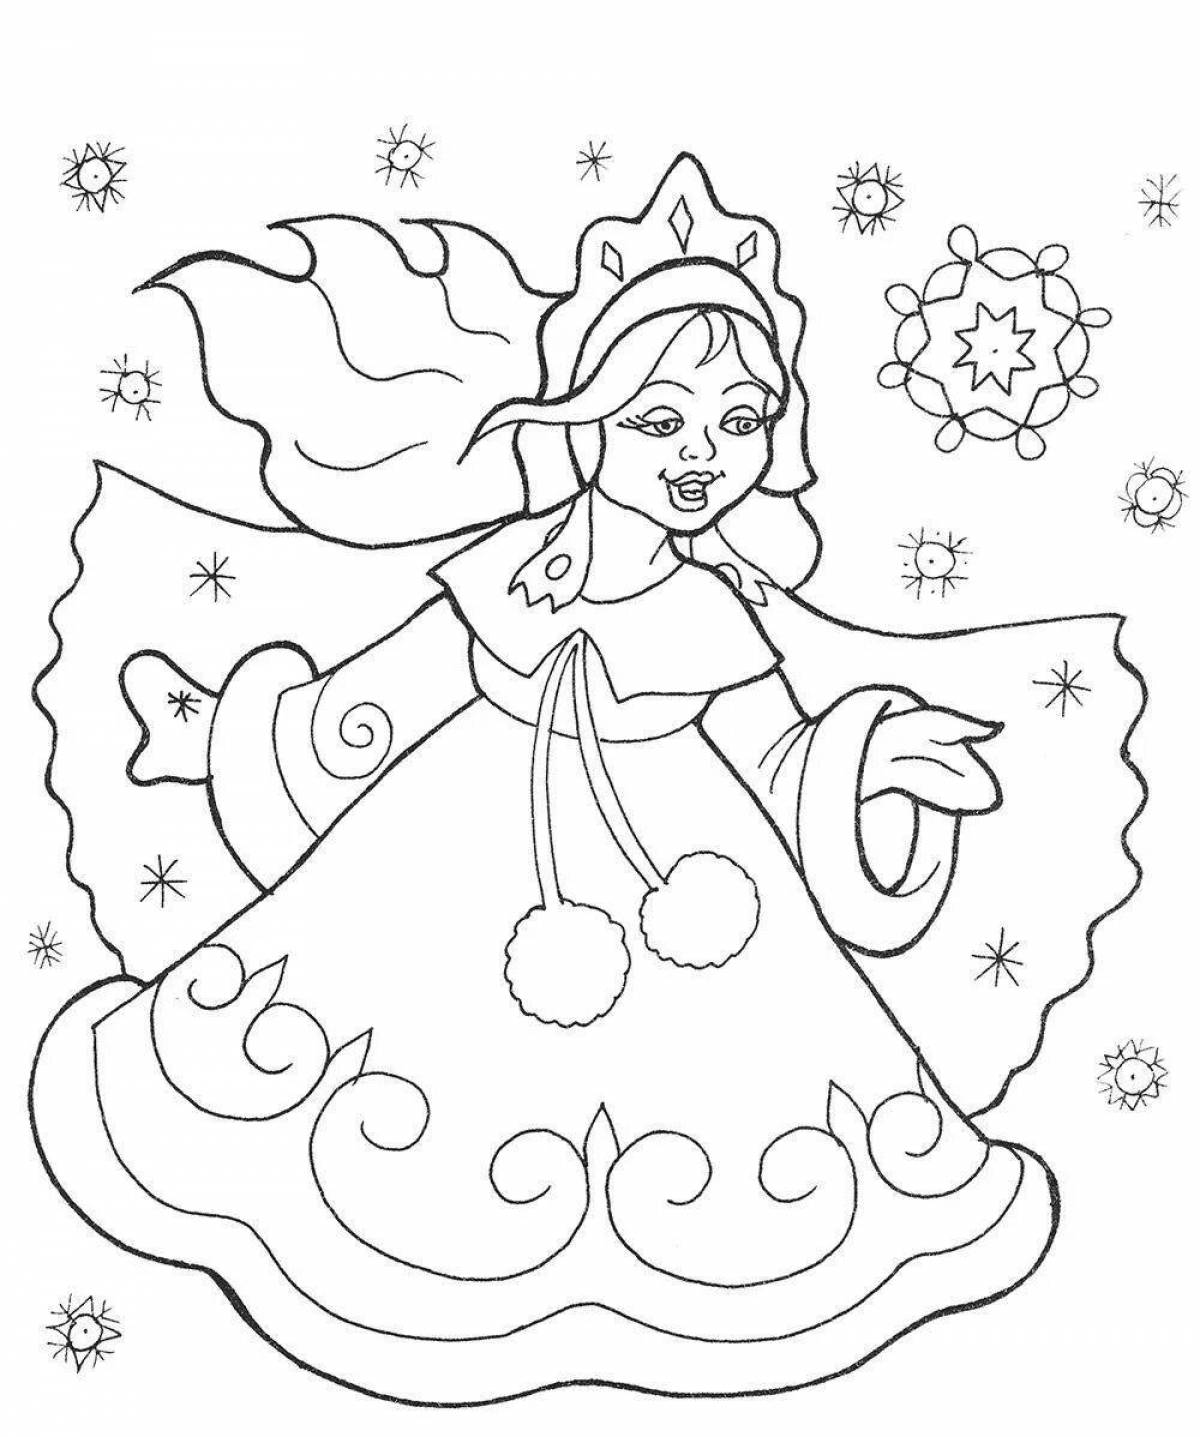 Coloring cute snow maiden